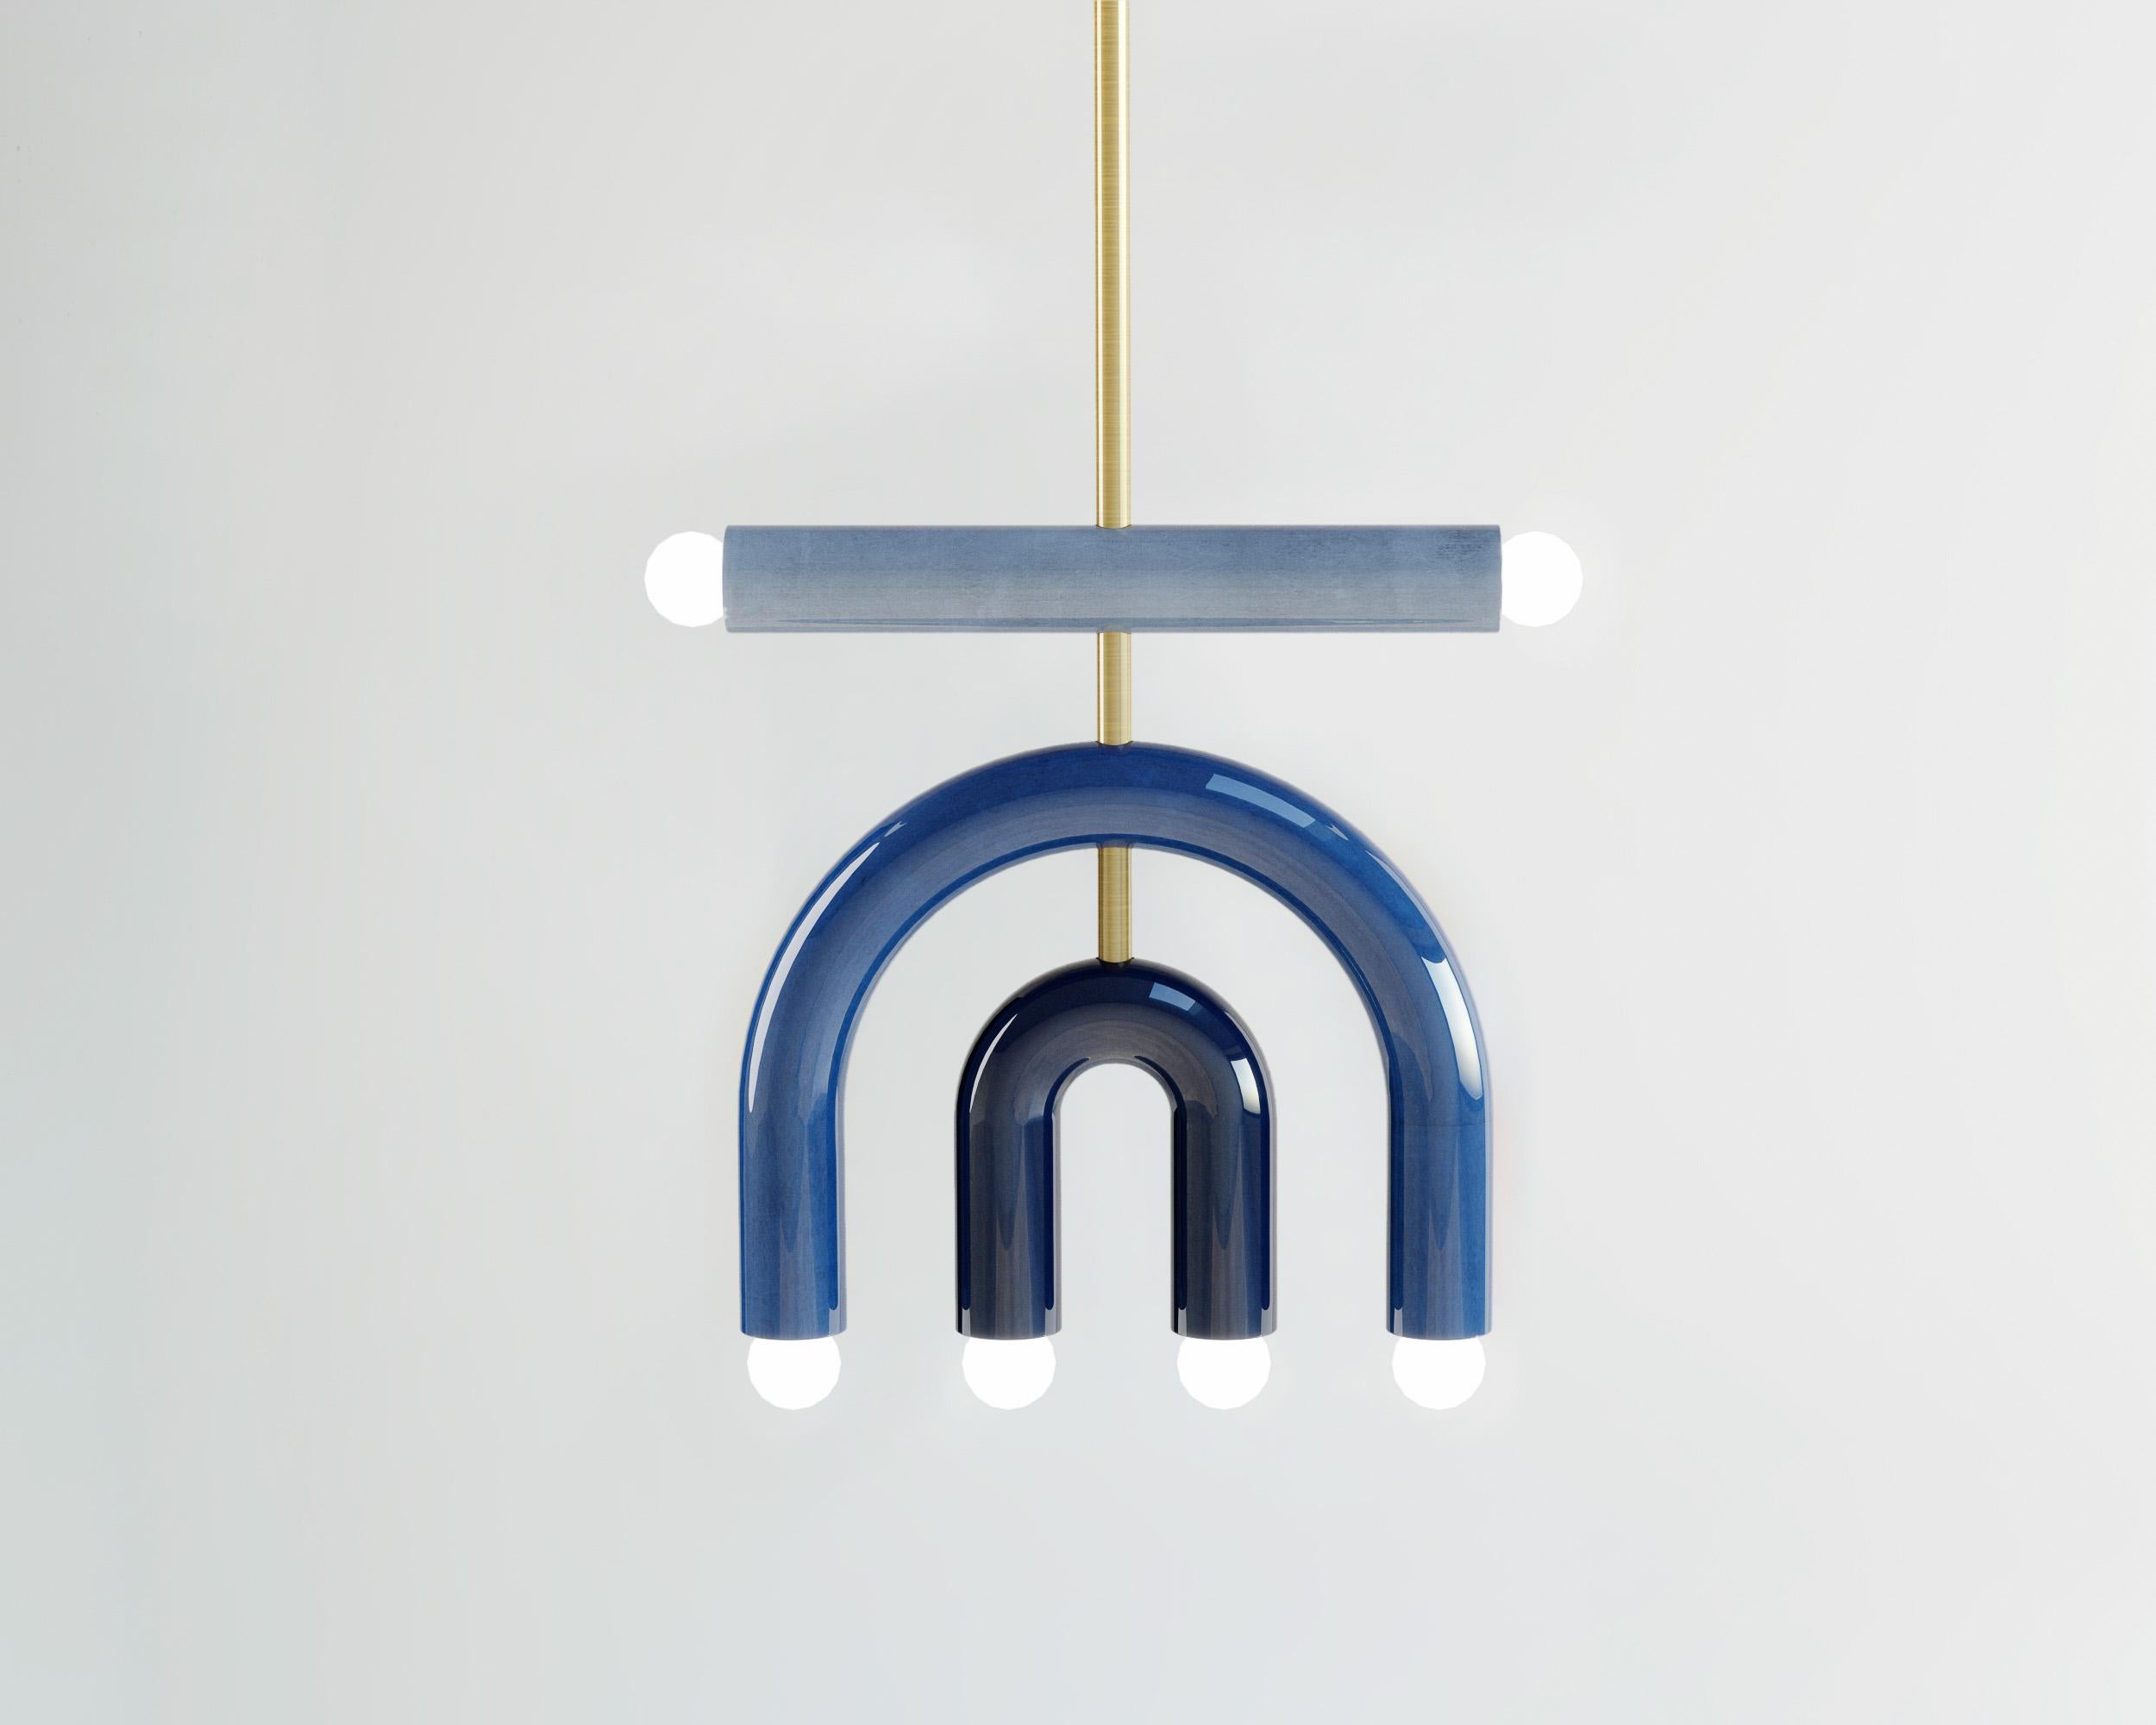 Ceramic Pendant Lamp TRN D1 BY Pani Jurek, Brass Rod, Blue and Ochre For Sale 2